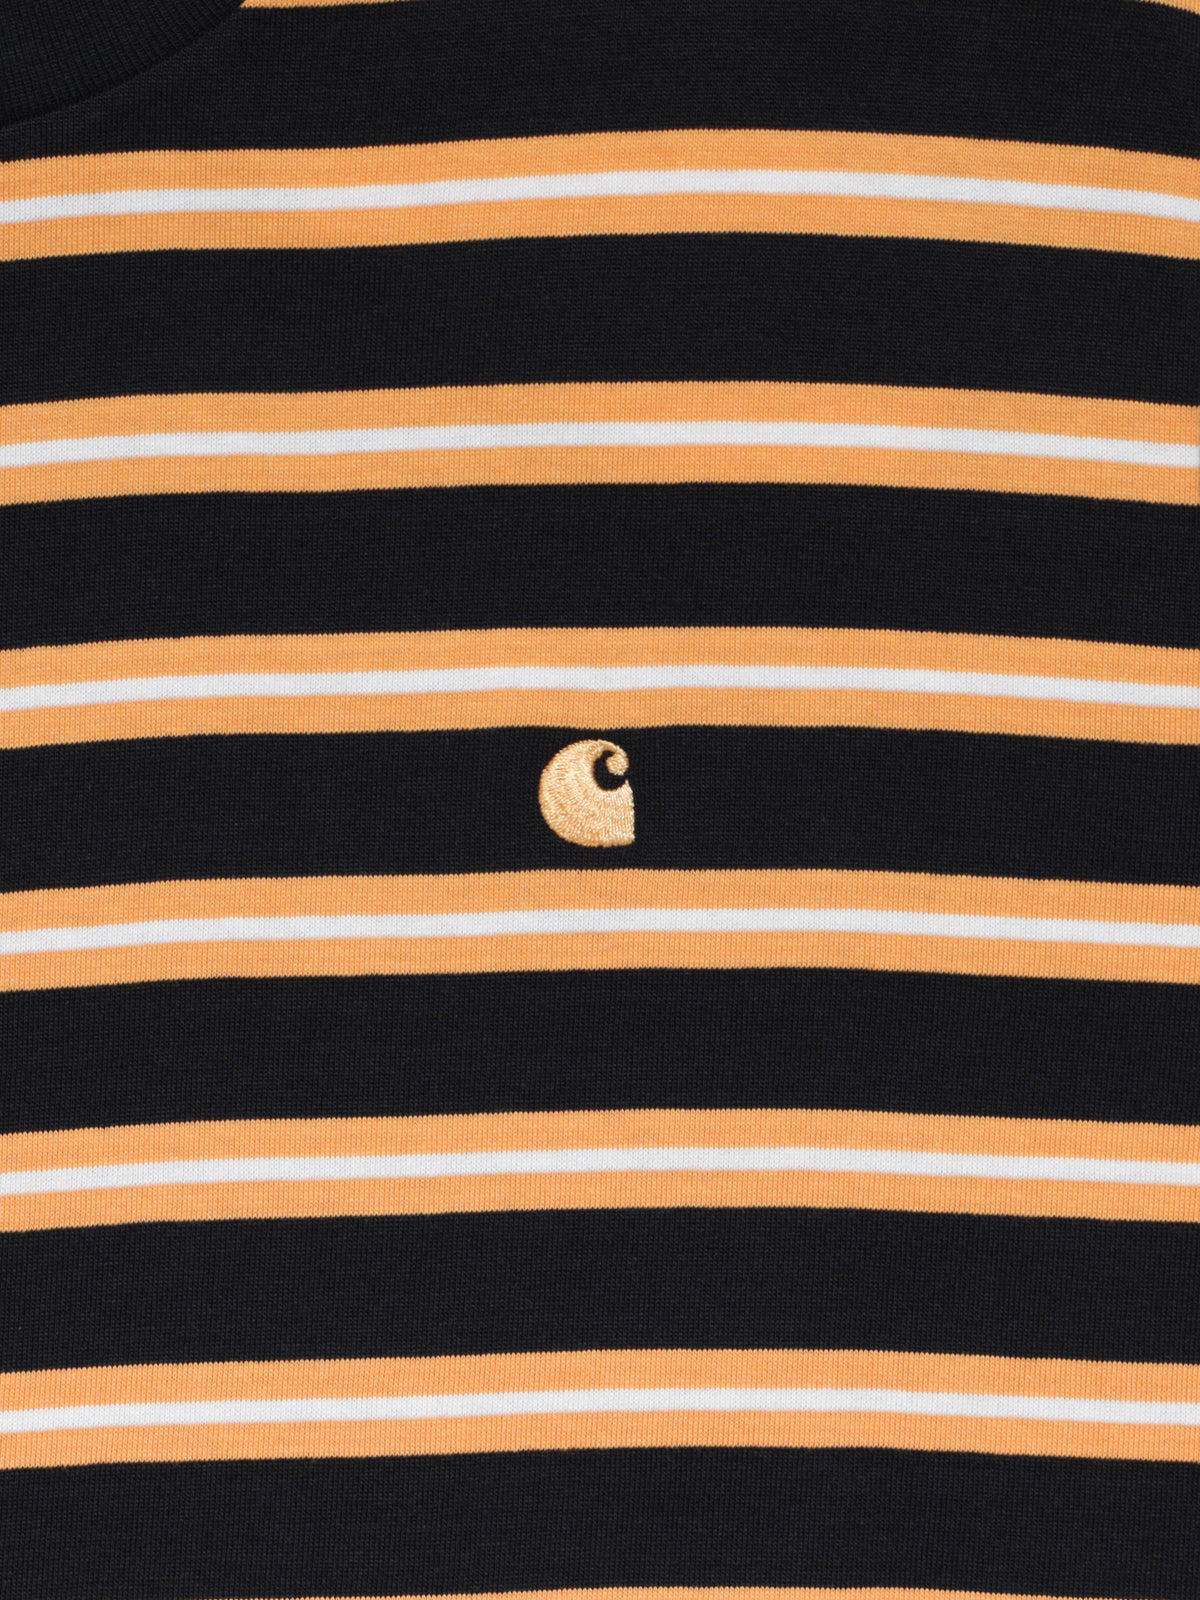 Oakland Short Sleeve T-Shirt in Navy &amp; Orange Stripe